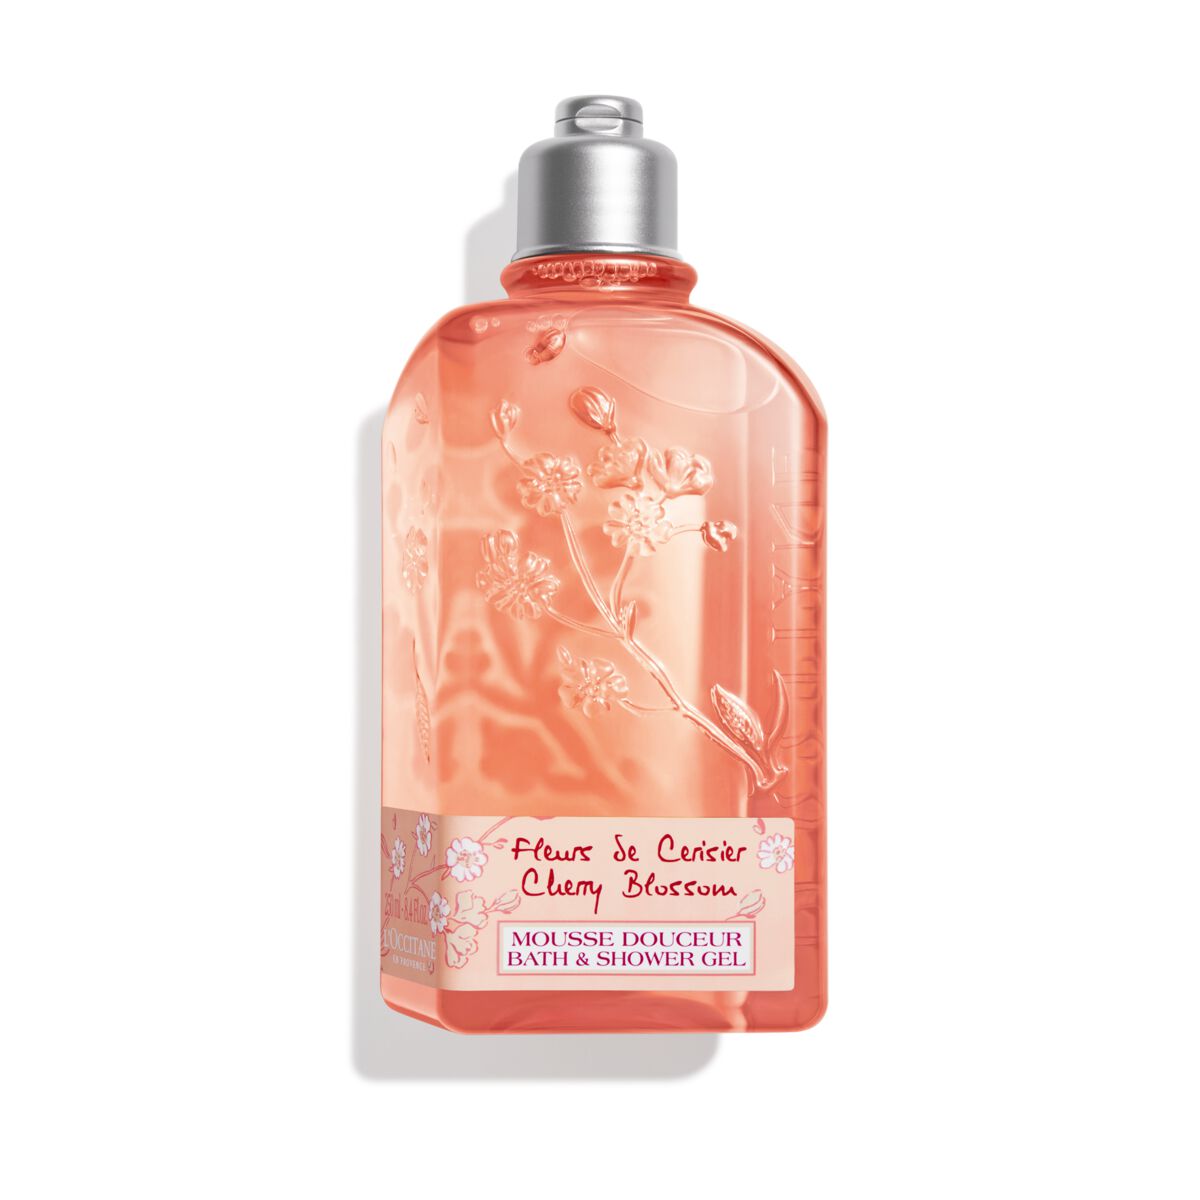 L'occitane Cherry Blossom Bath & Shower Gel 8.4 Fl oz In Pink